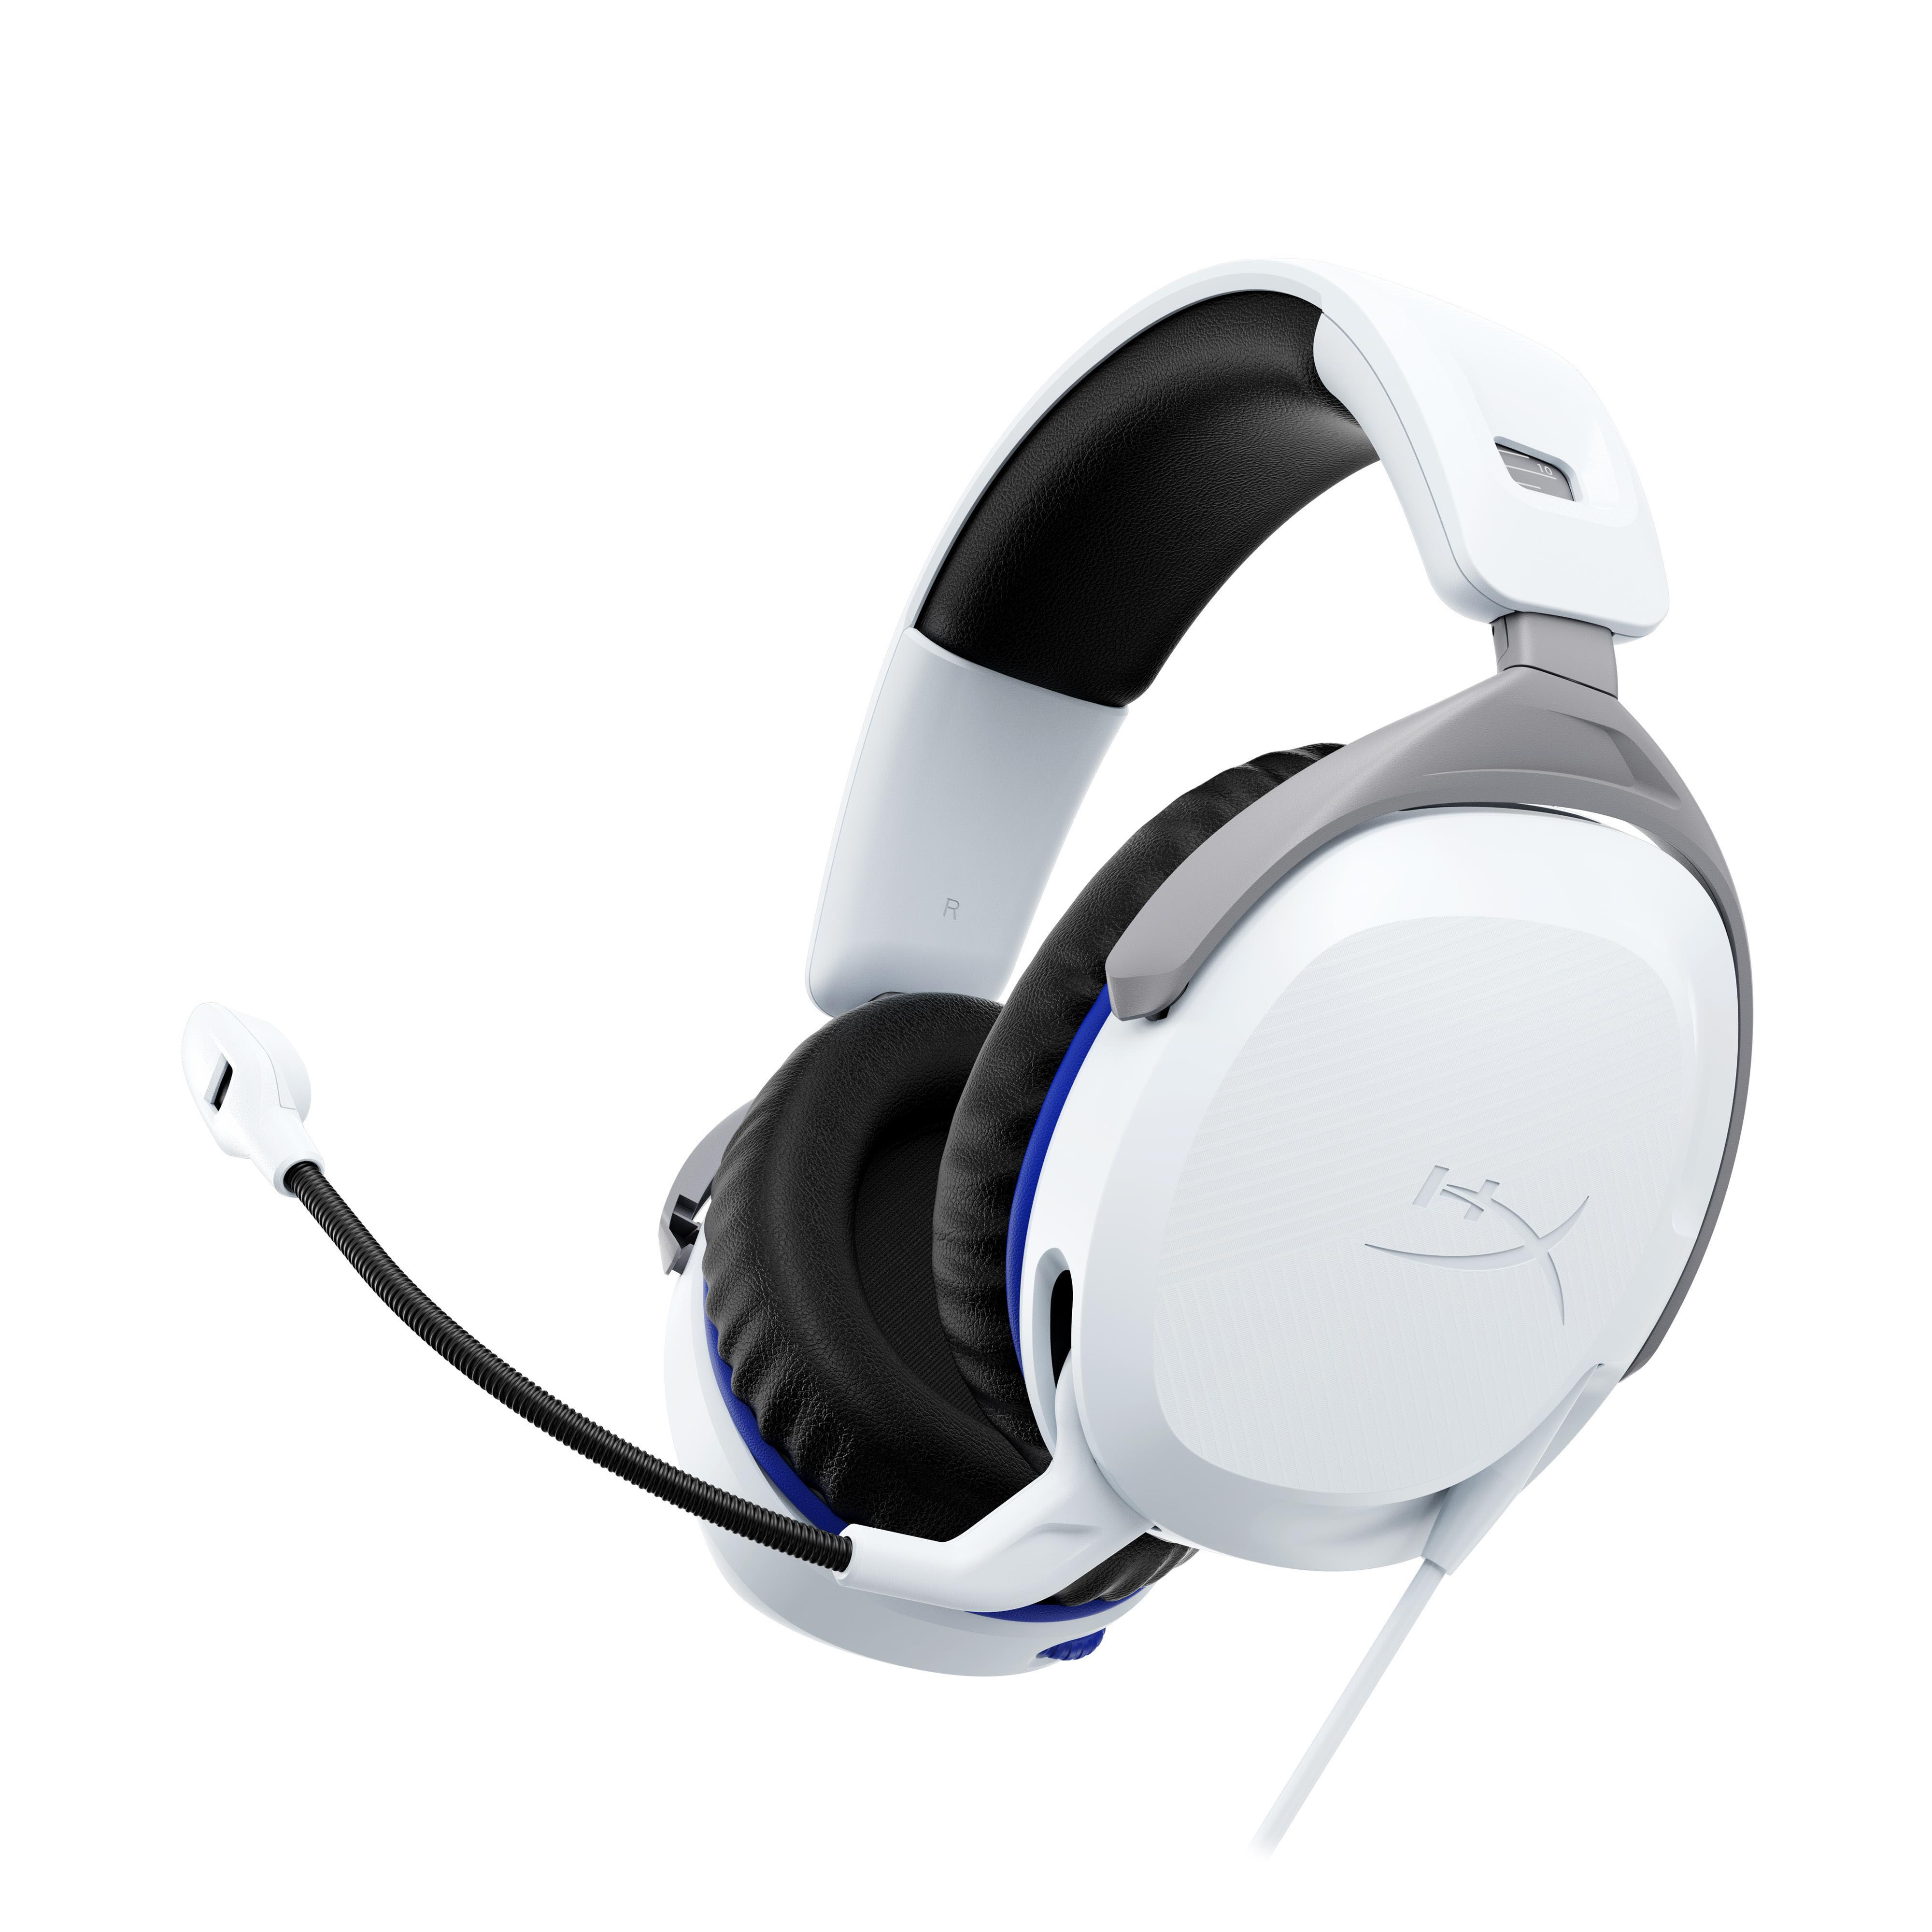 HYPERX 75X29AA Stinger Headset Gaming Cloud für 2 PlayStation, Weiß Over-ear